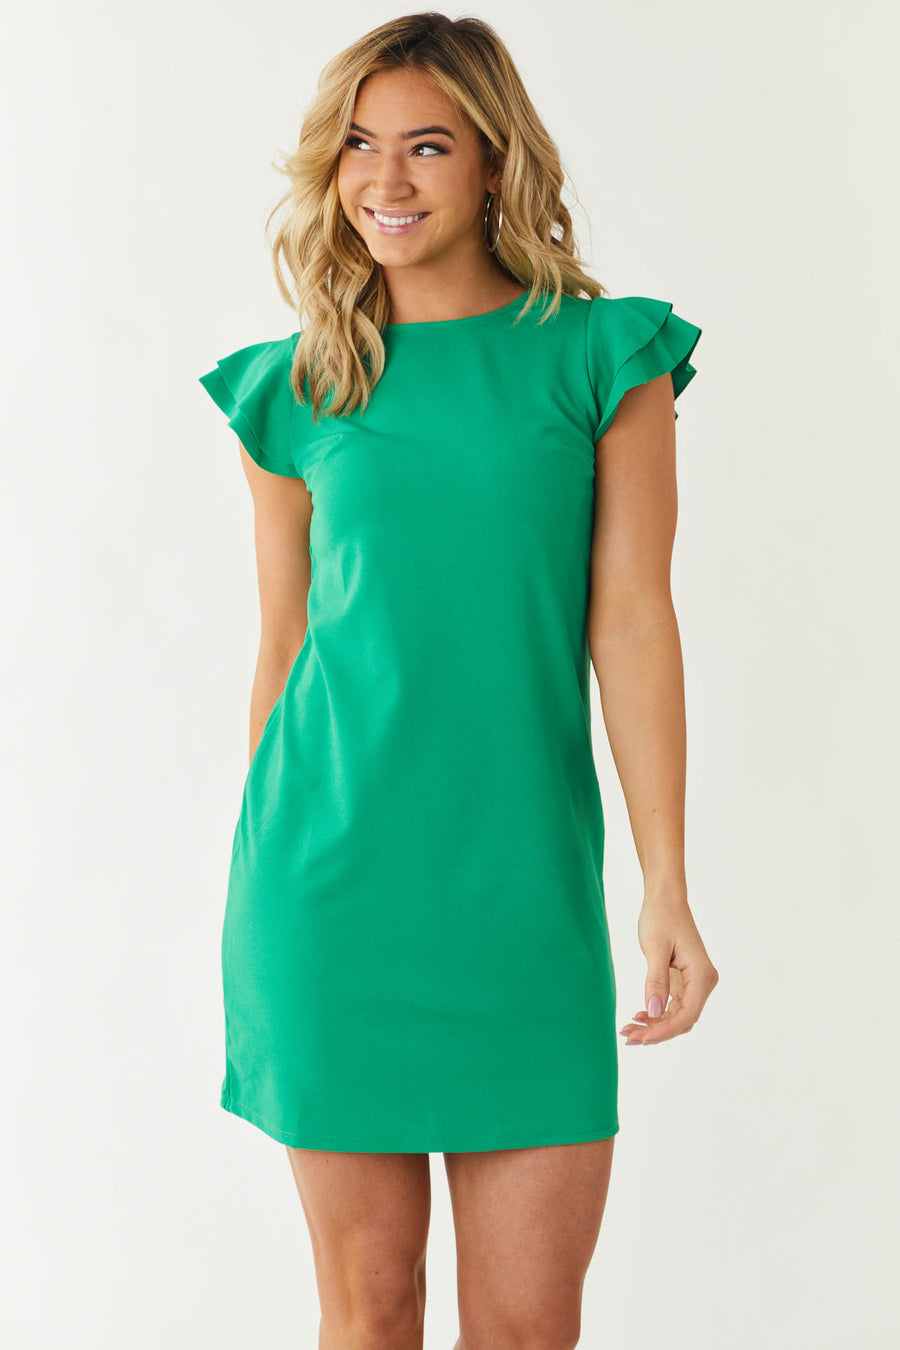 Jade Green Short Knit Dress with Layered Ruffle Cap Sleeves